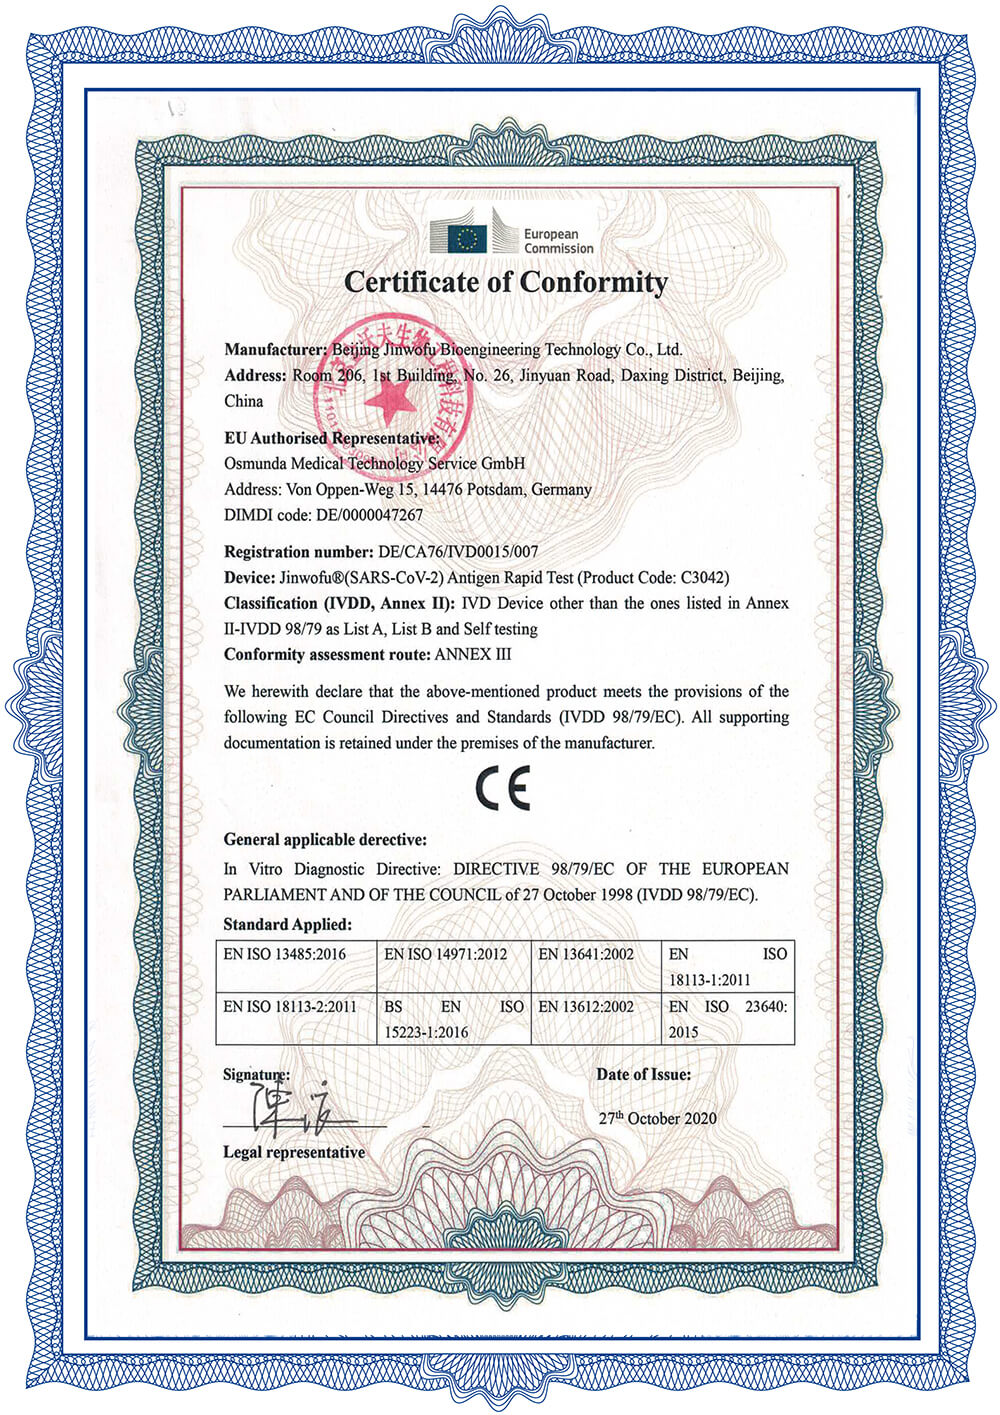 Special Test Certificate of COVID-19 Antigen